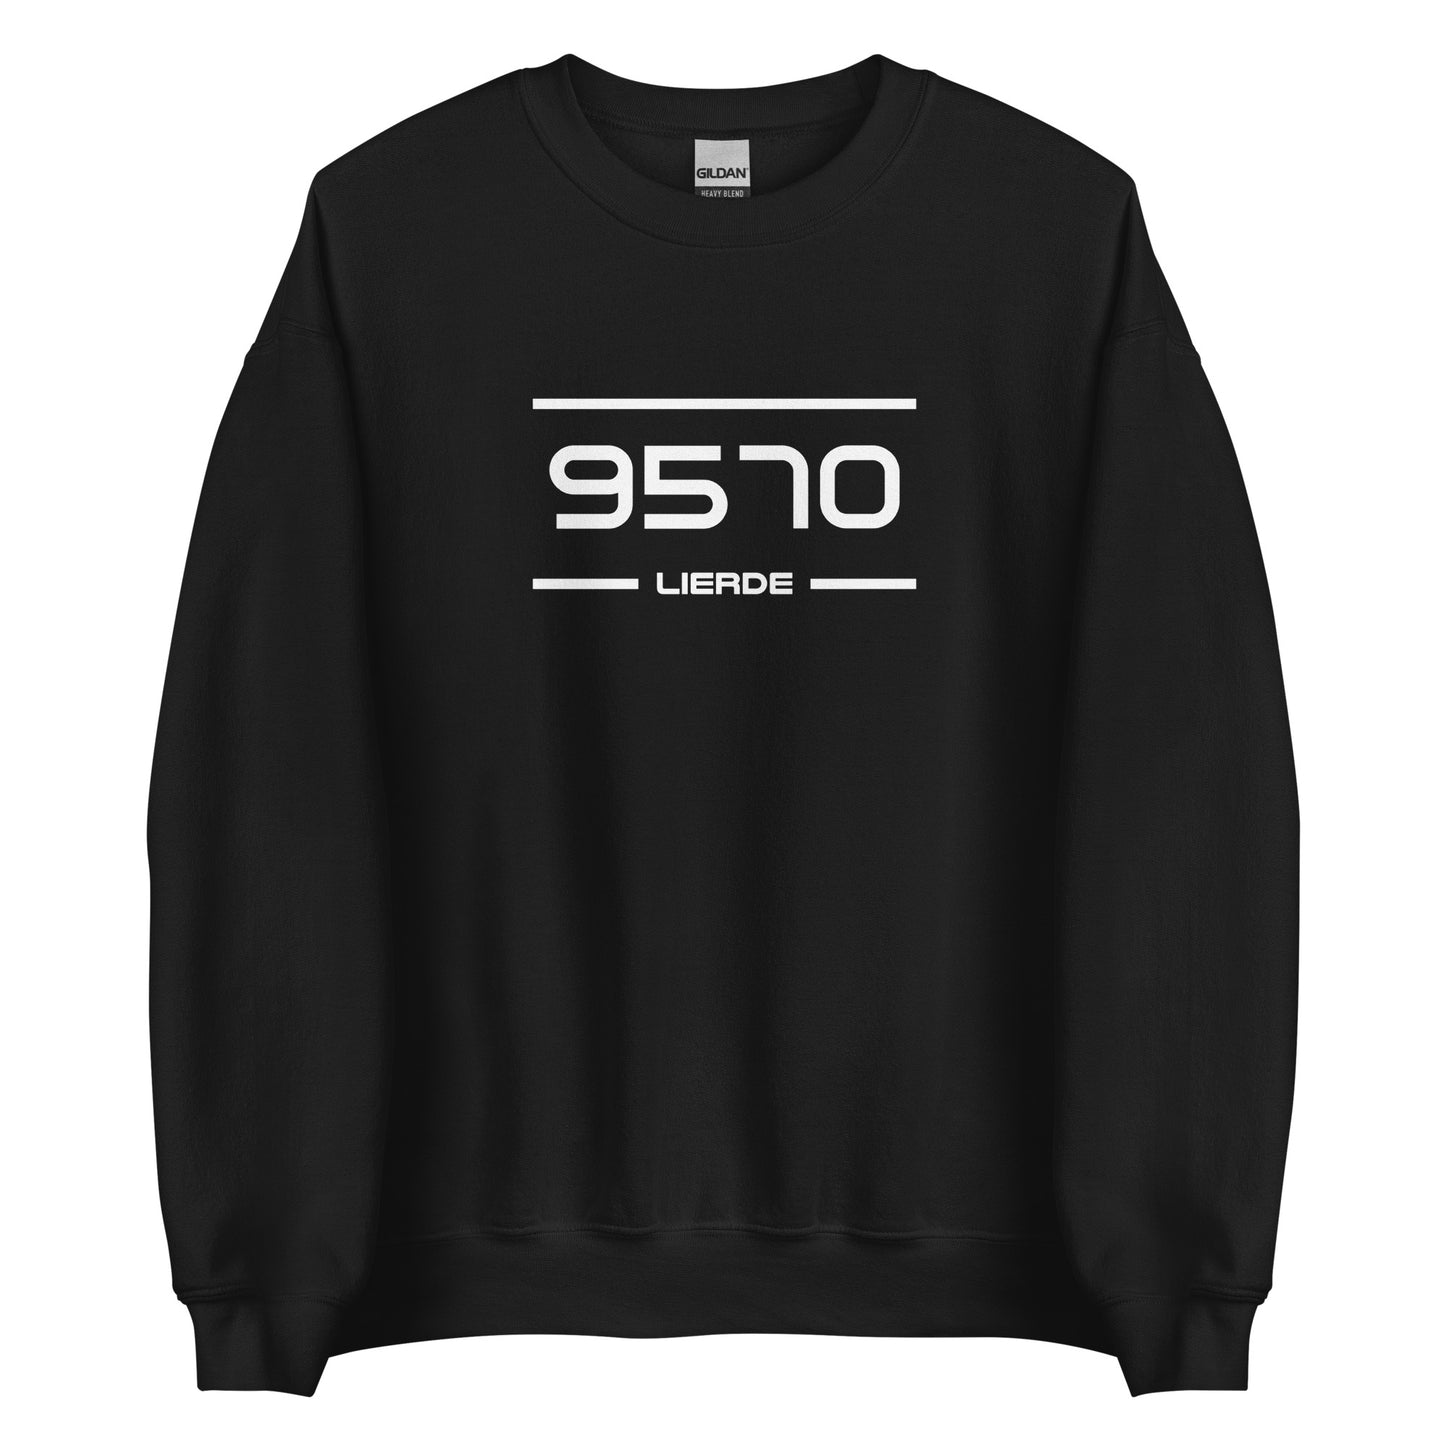 Sweater - 9570 - Lierde (M/V)